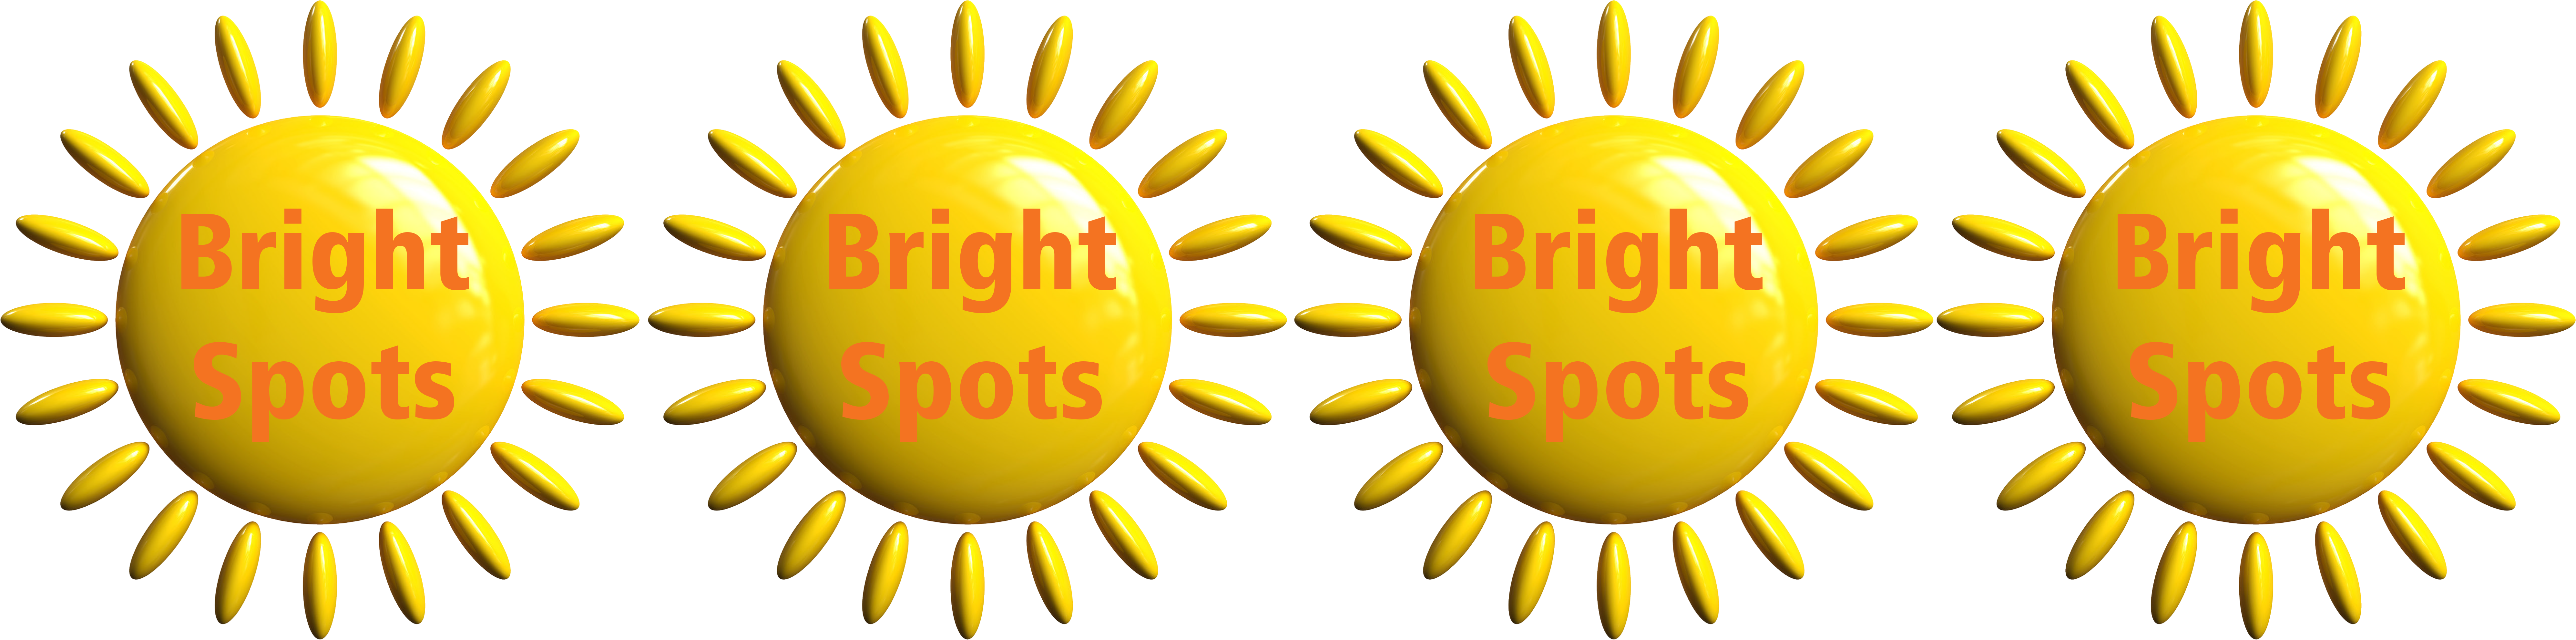 https://bdch.com/sites/bdch.com/assets/images/awards-logos/Bright-Spots-NEW.png